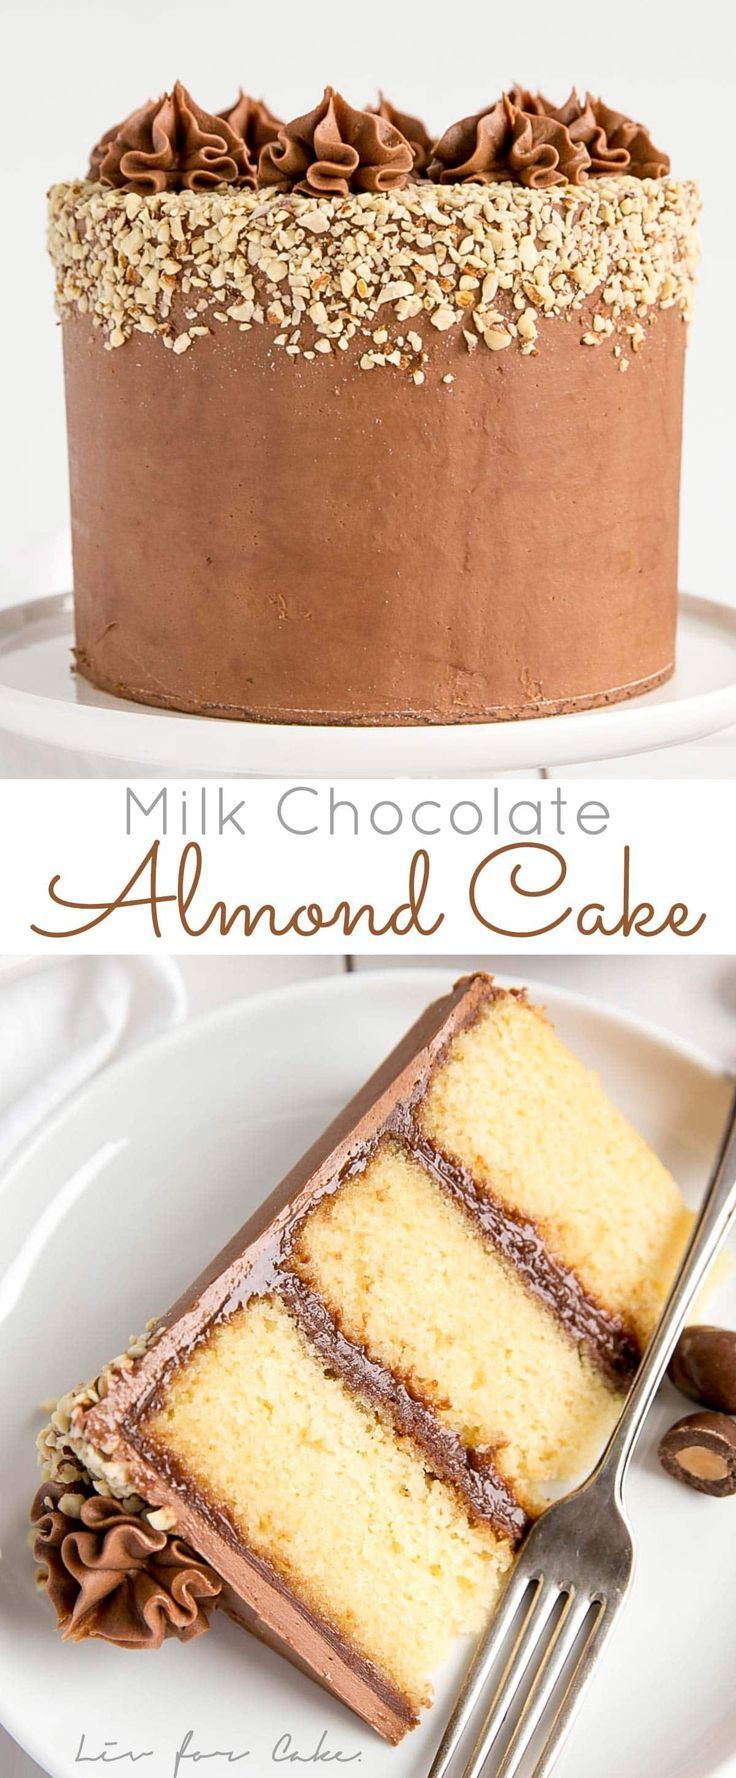 20 almond cake recipes
 ideas